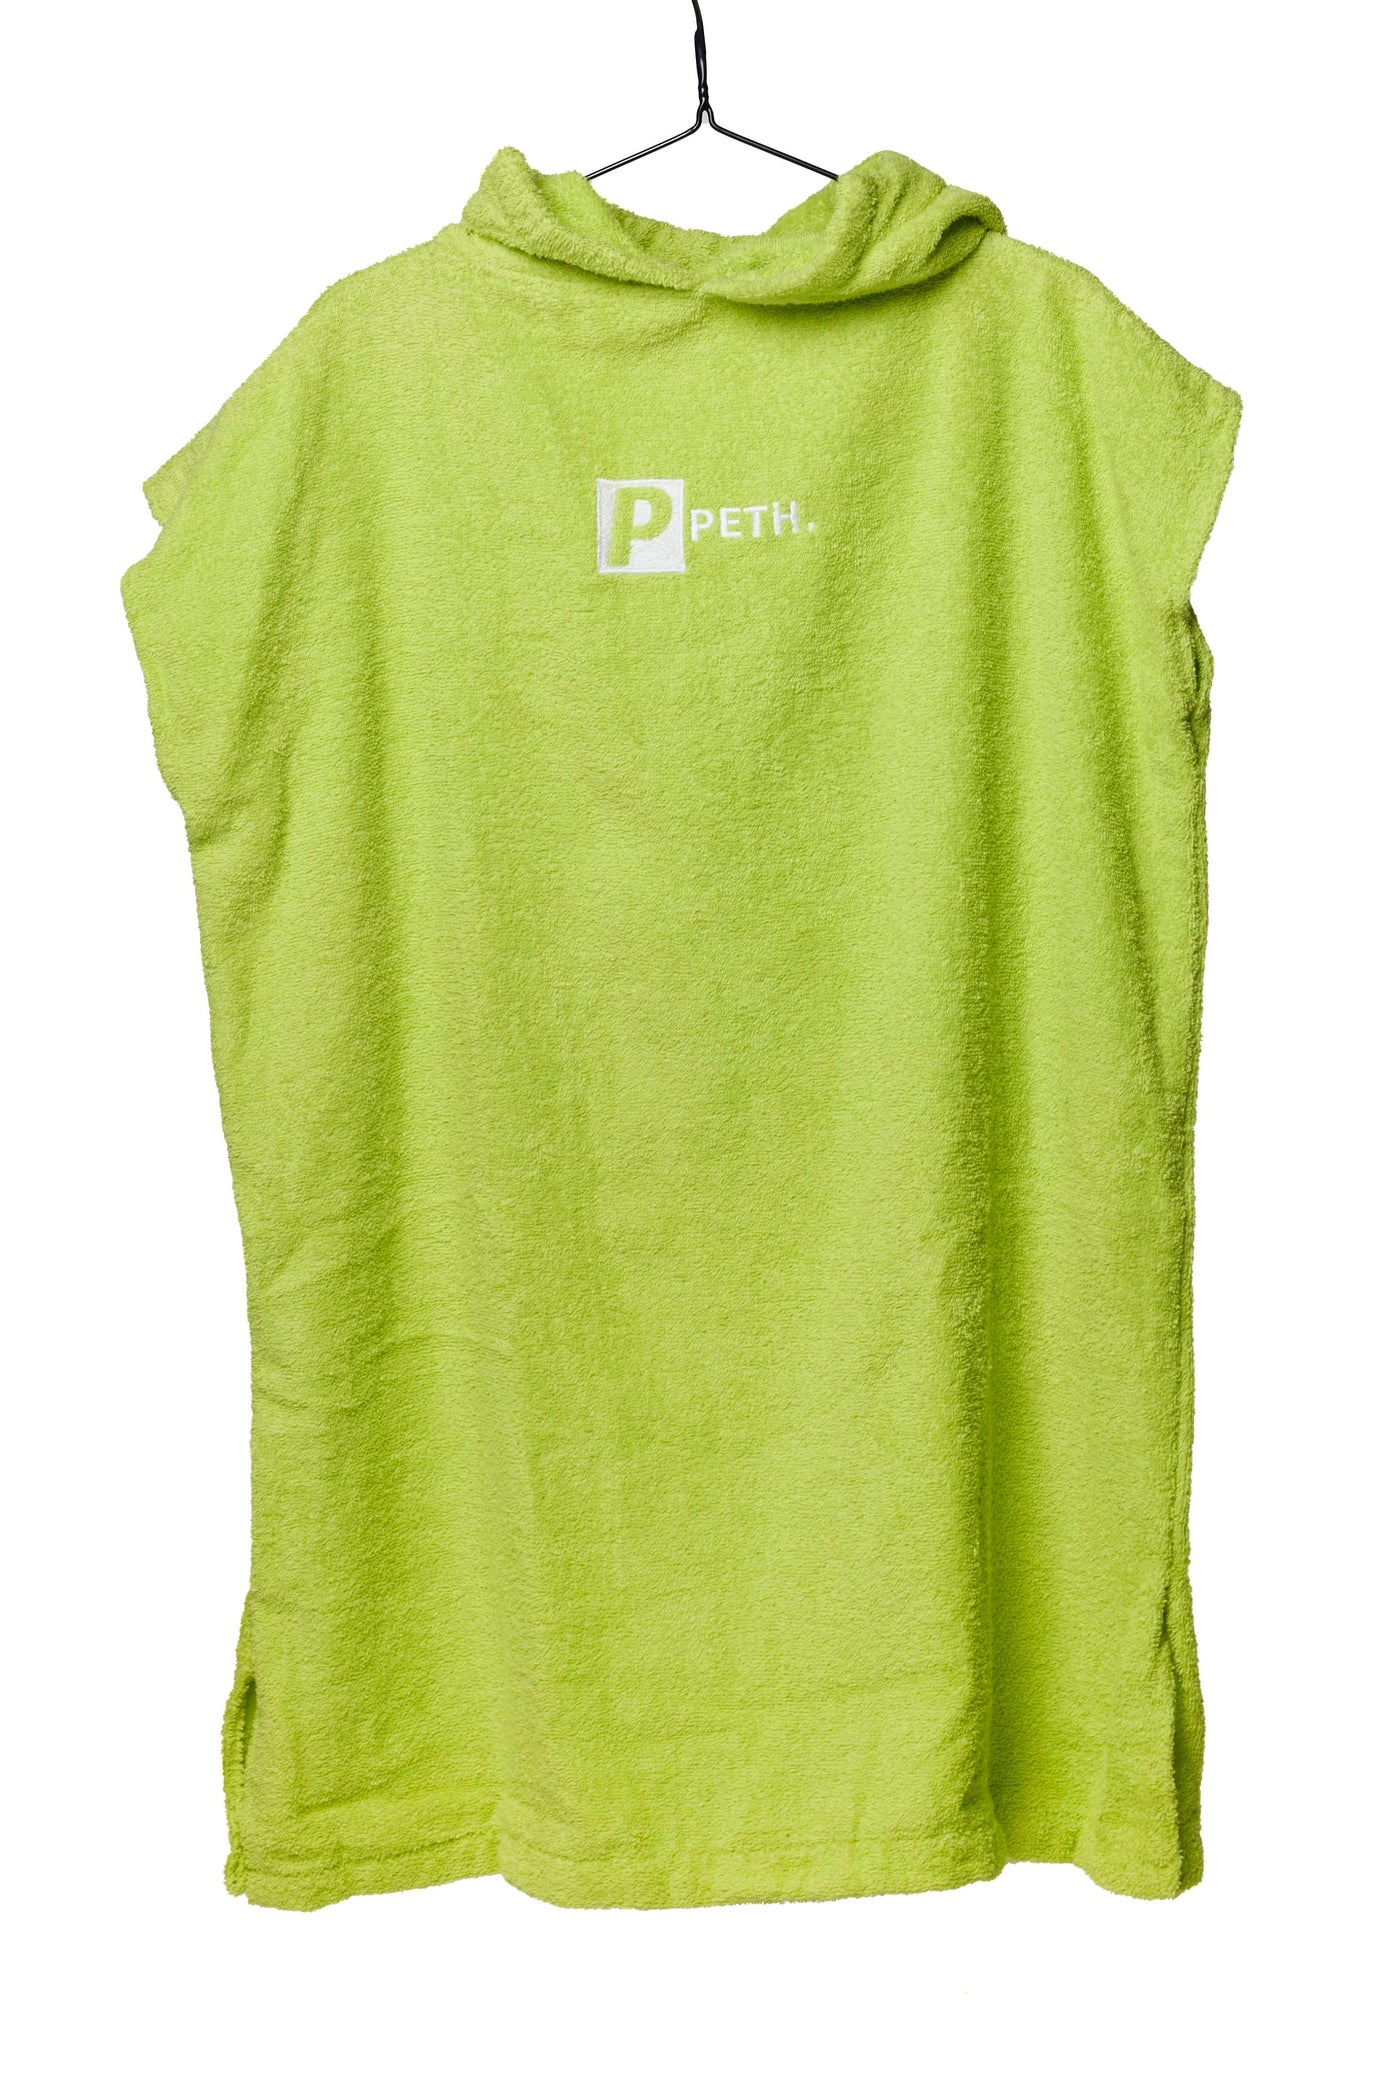 Premium Lime Green Children’s Cotton Towel Changing Robe - Poncho